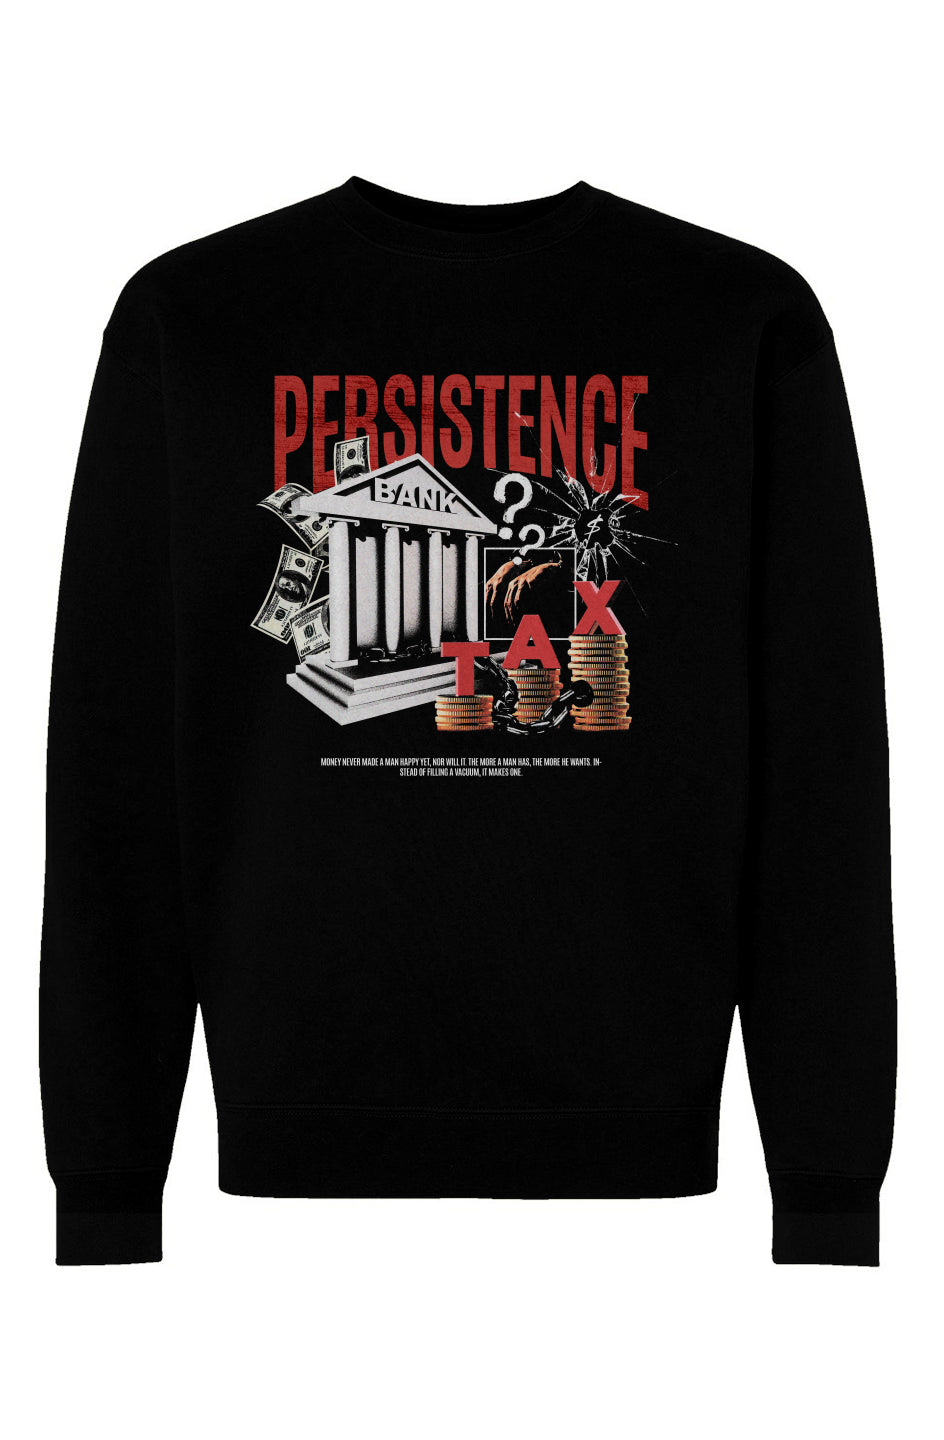 Persistence Sweatshirt